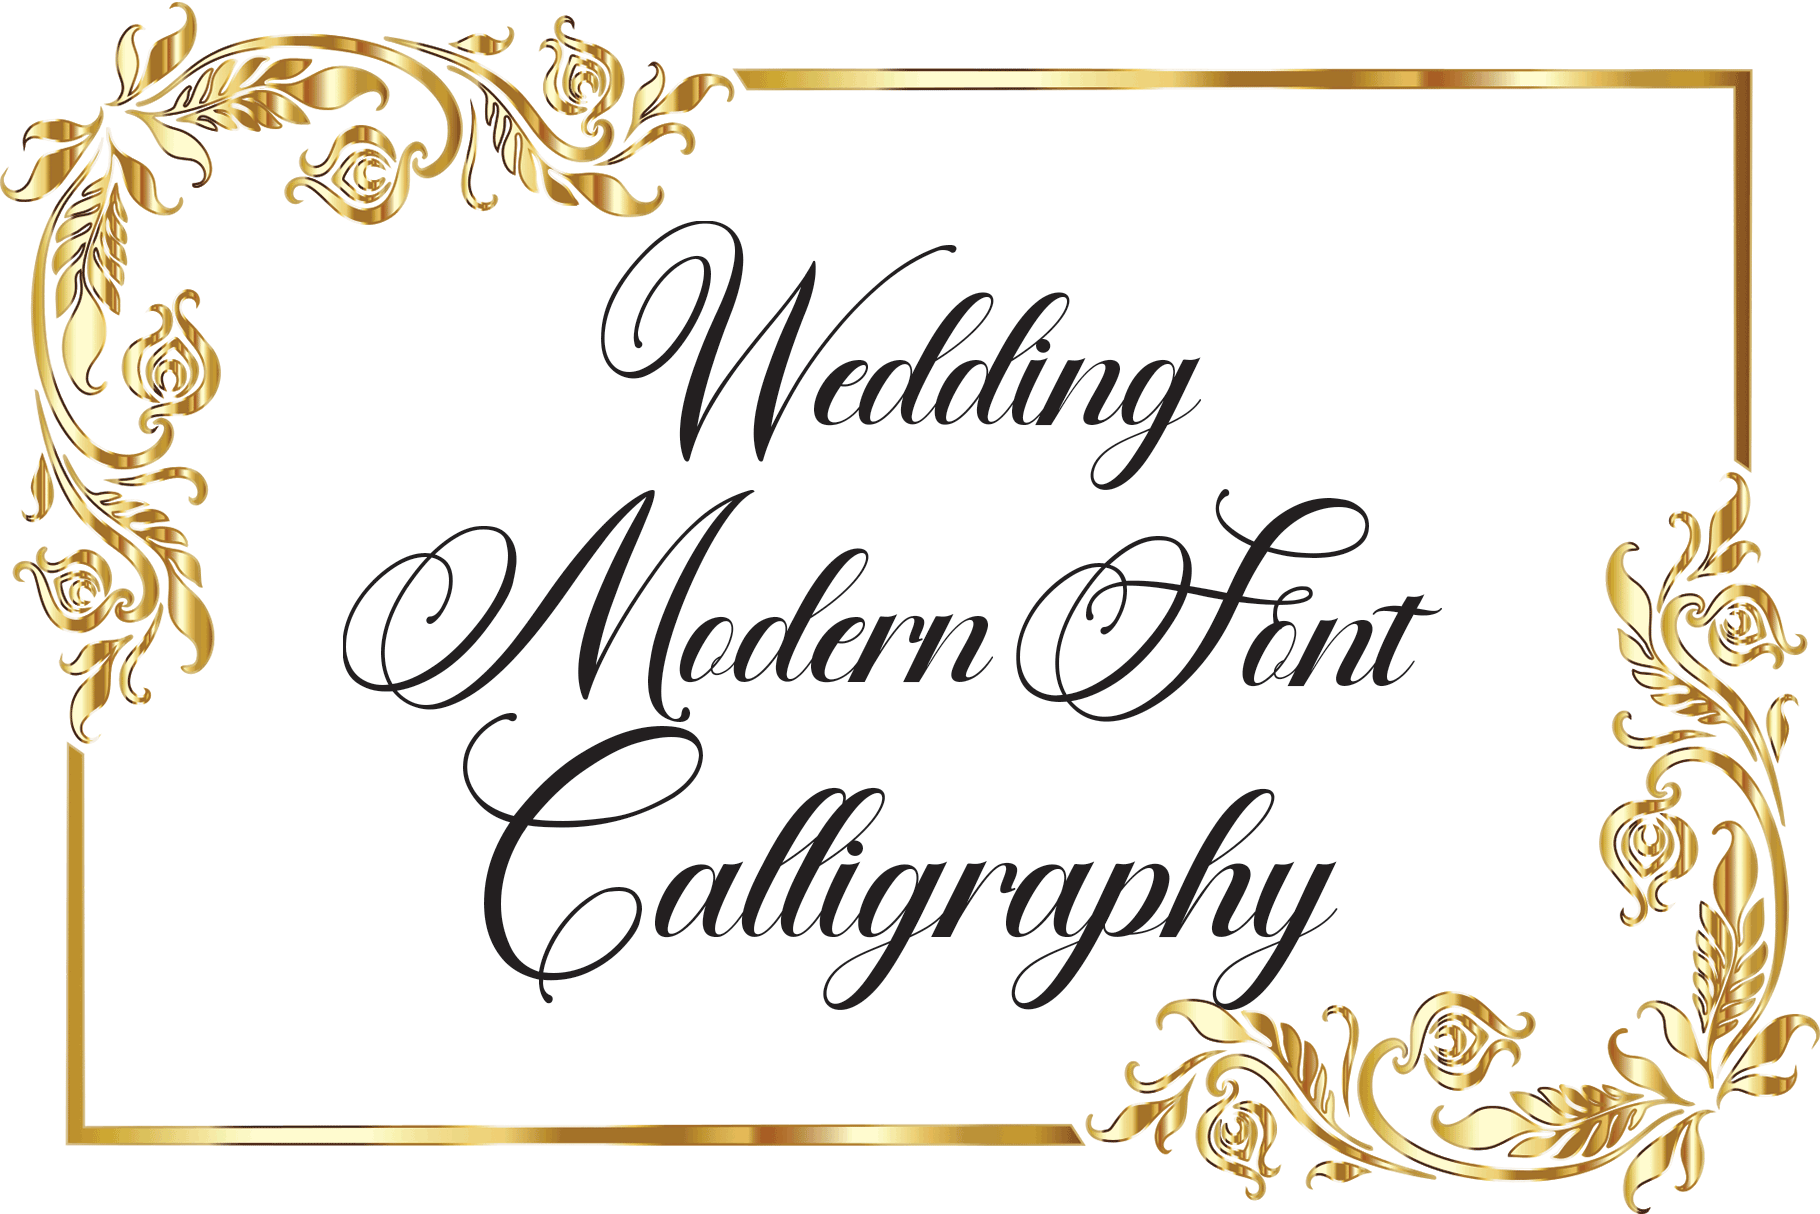 Violetta Handmade Script Font cover image.